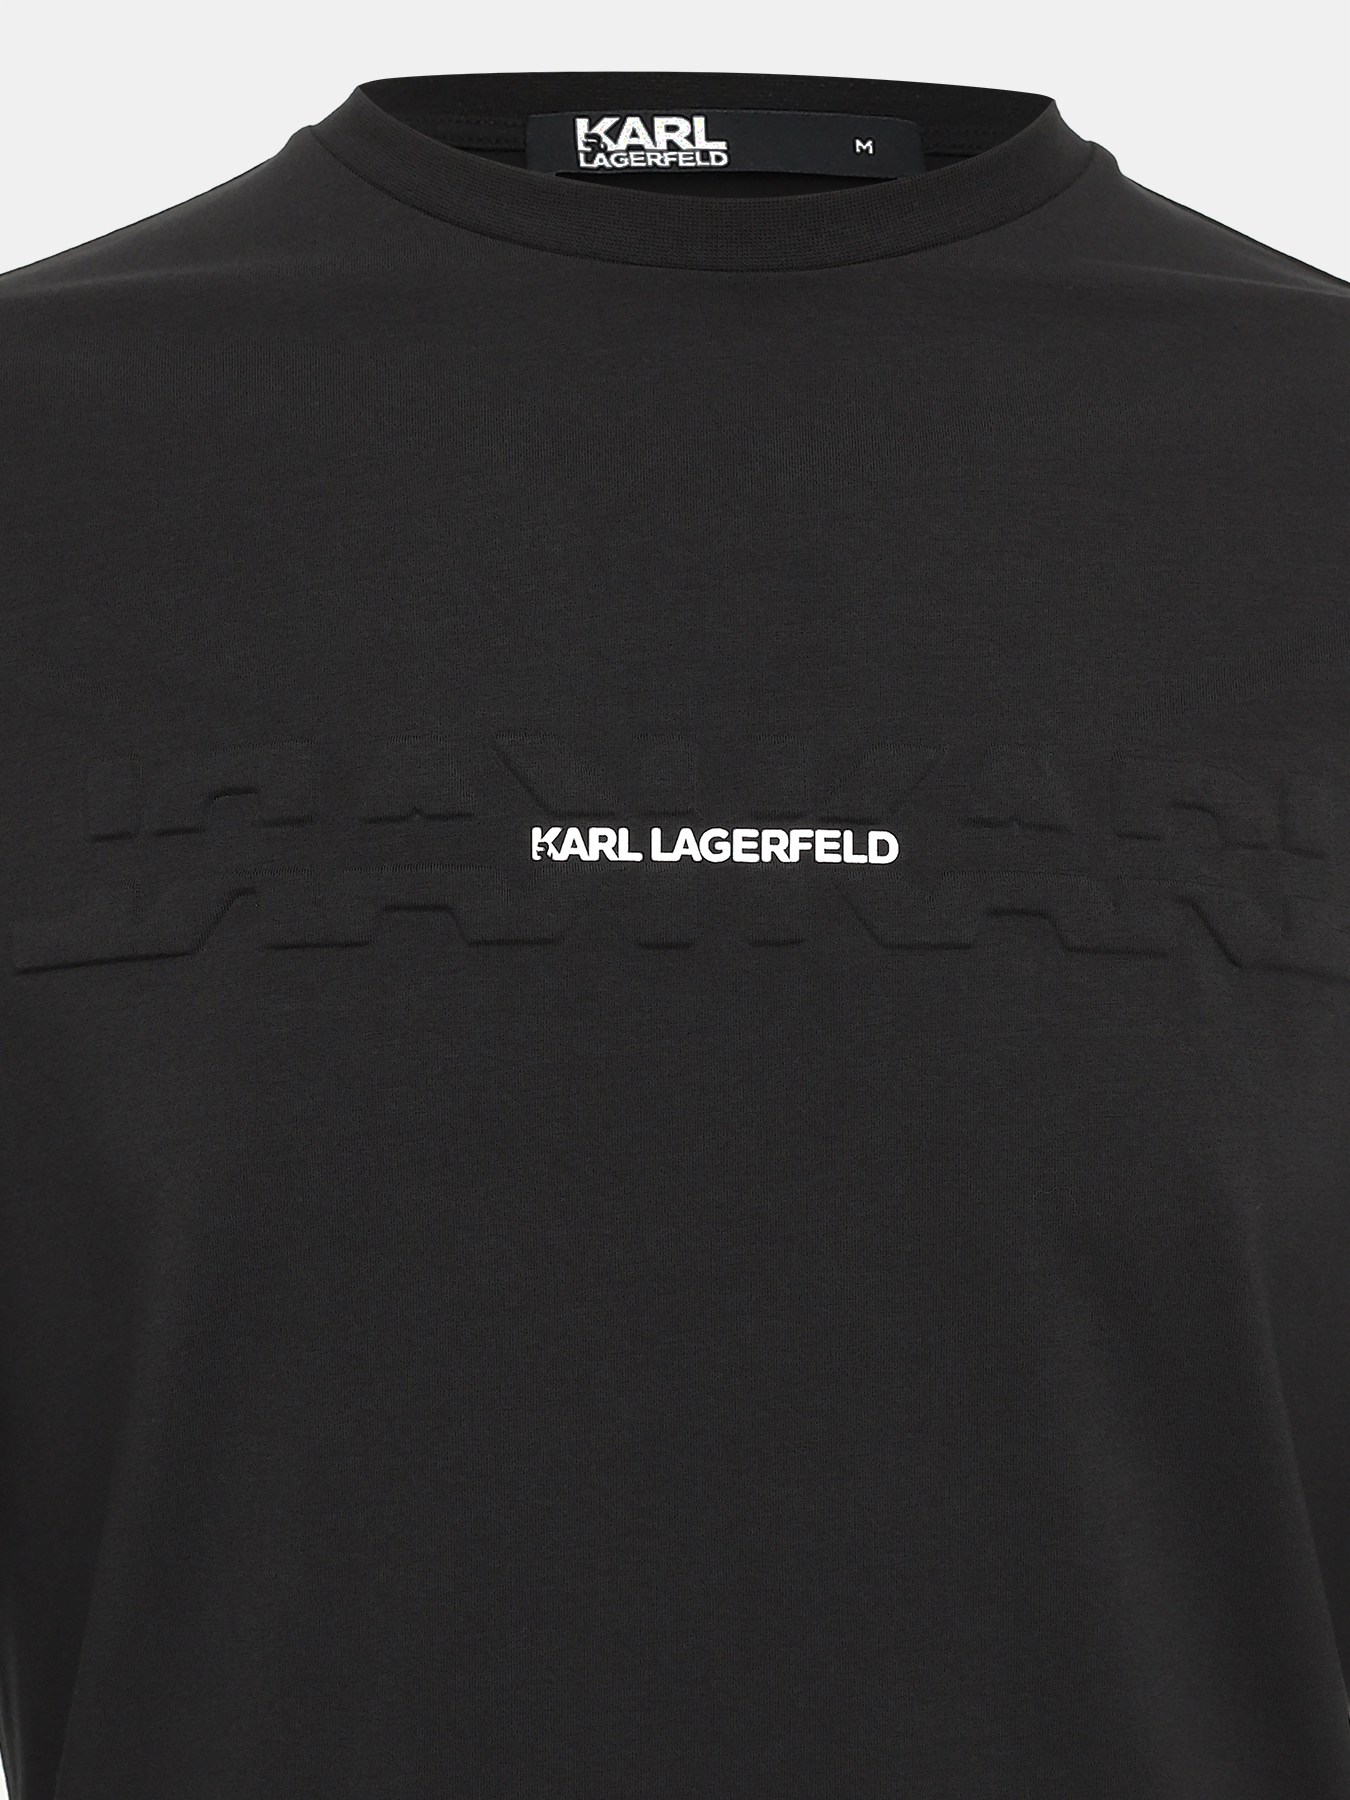 Лонгслив Karl Lagerfeld 420306-287, цвет черный, размер 56-58 - фото 2